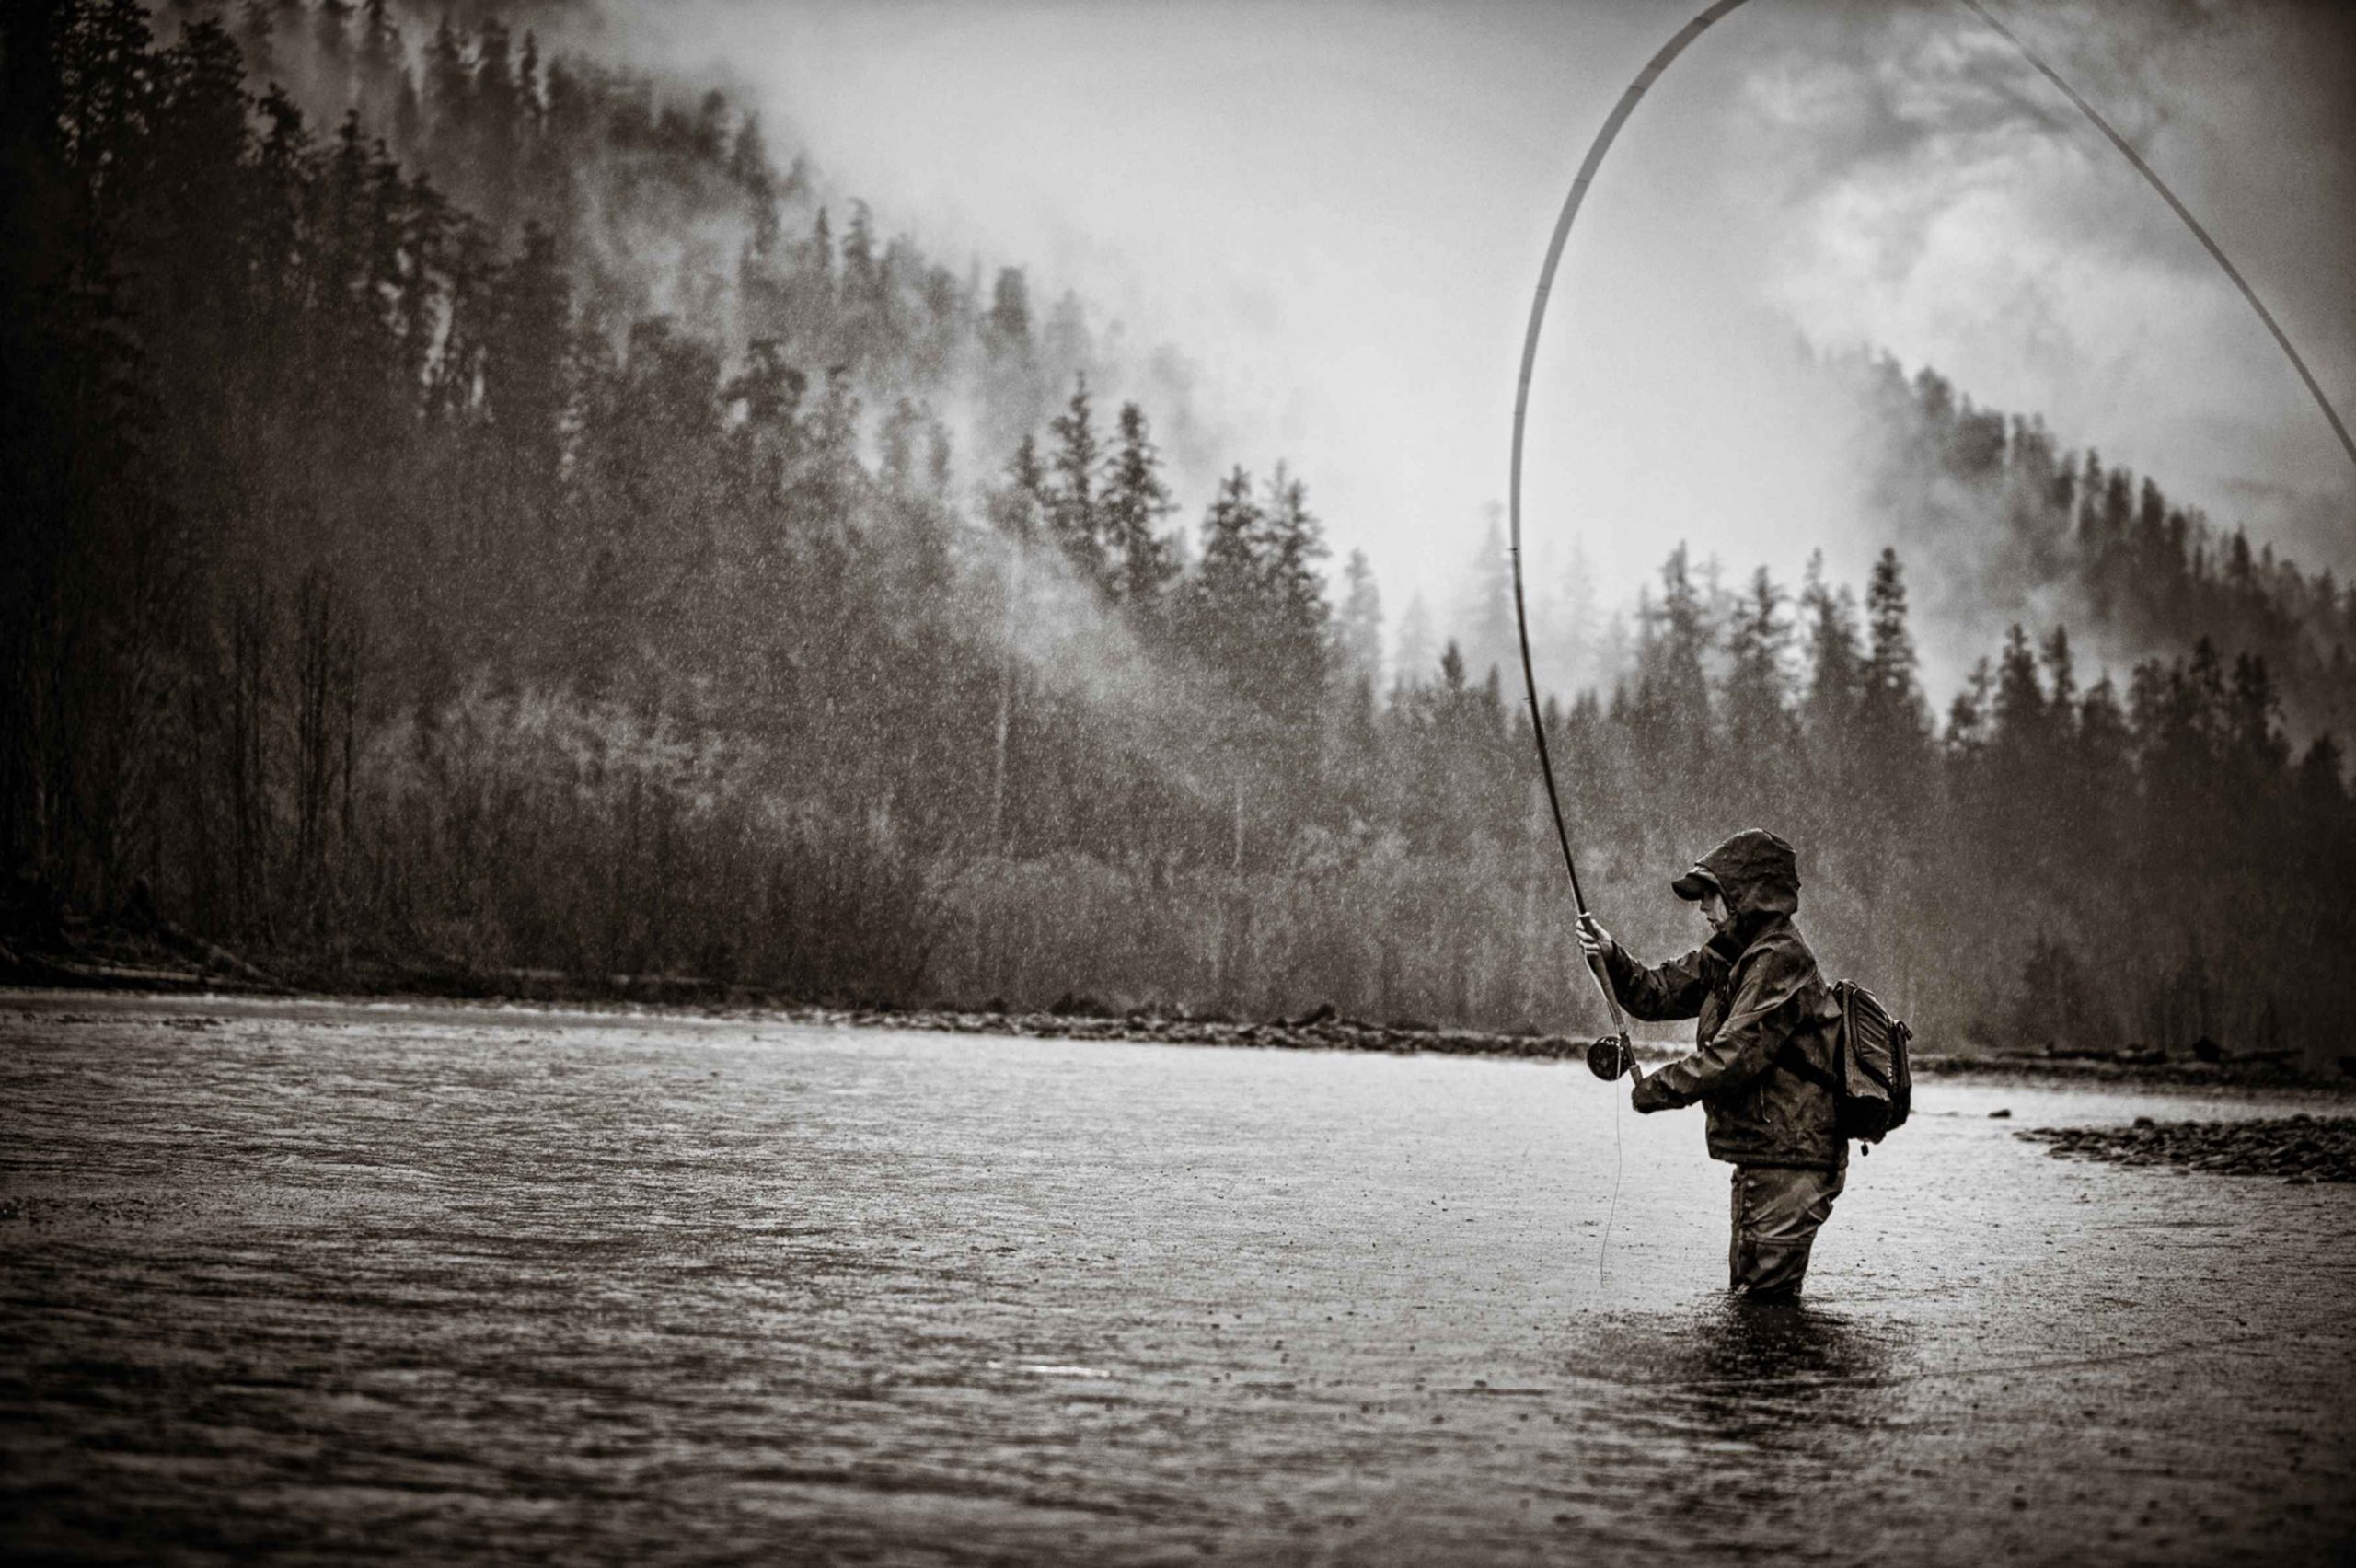 steelhead fishing